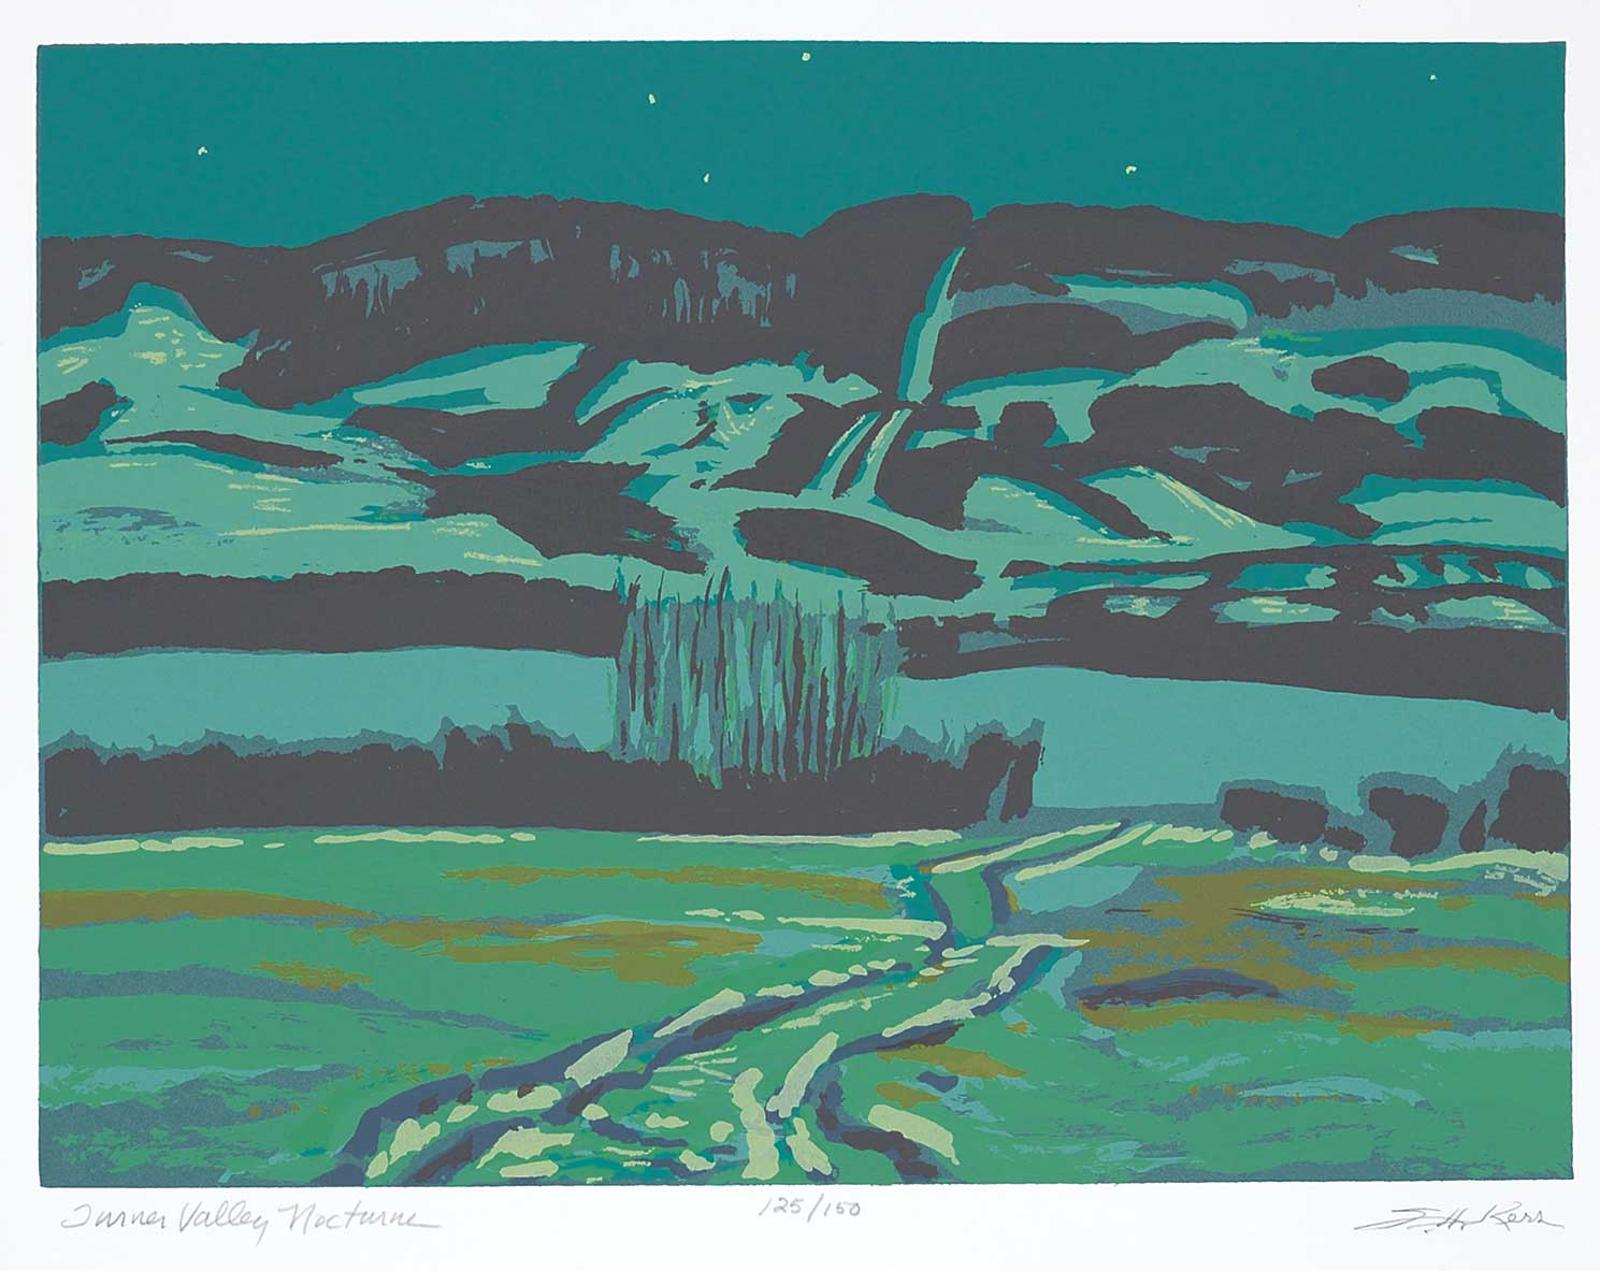 Illingworth Holey (Buck) Kerr (1905-1989) - Turner Valley Nocturne  #125/150